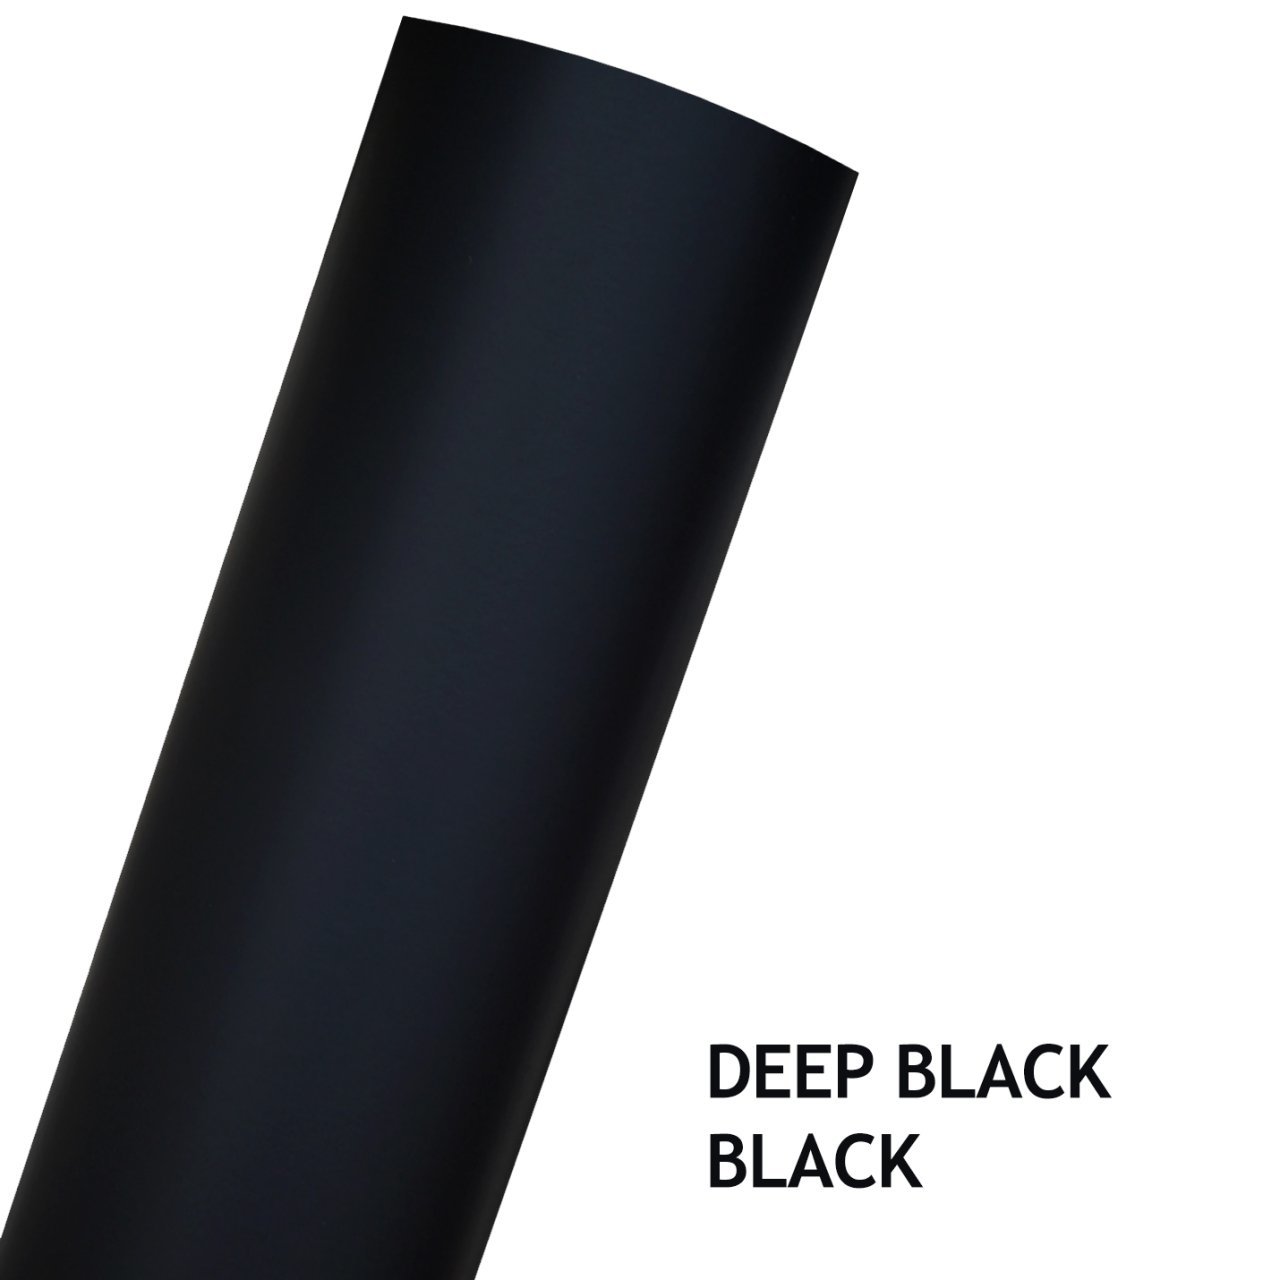 3M 2080 - M22 MATT DEEP BLACK